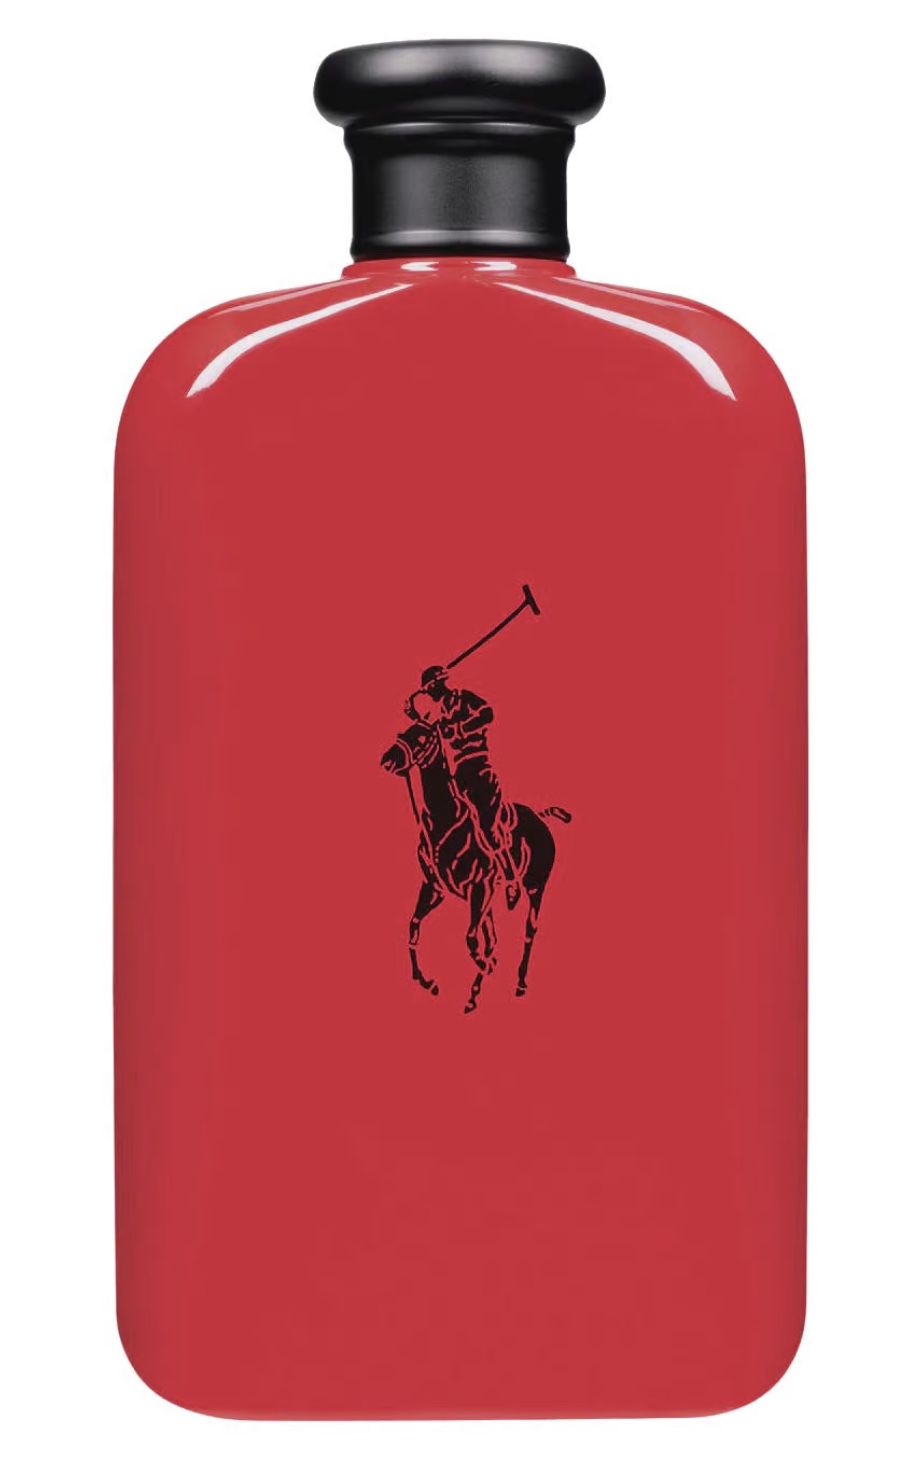 200ml Ralph Lauren Polo Red Eau de Toilette für 49,99€ (statt 87€)